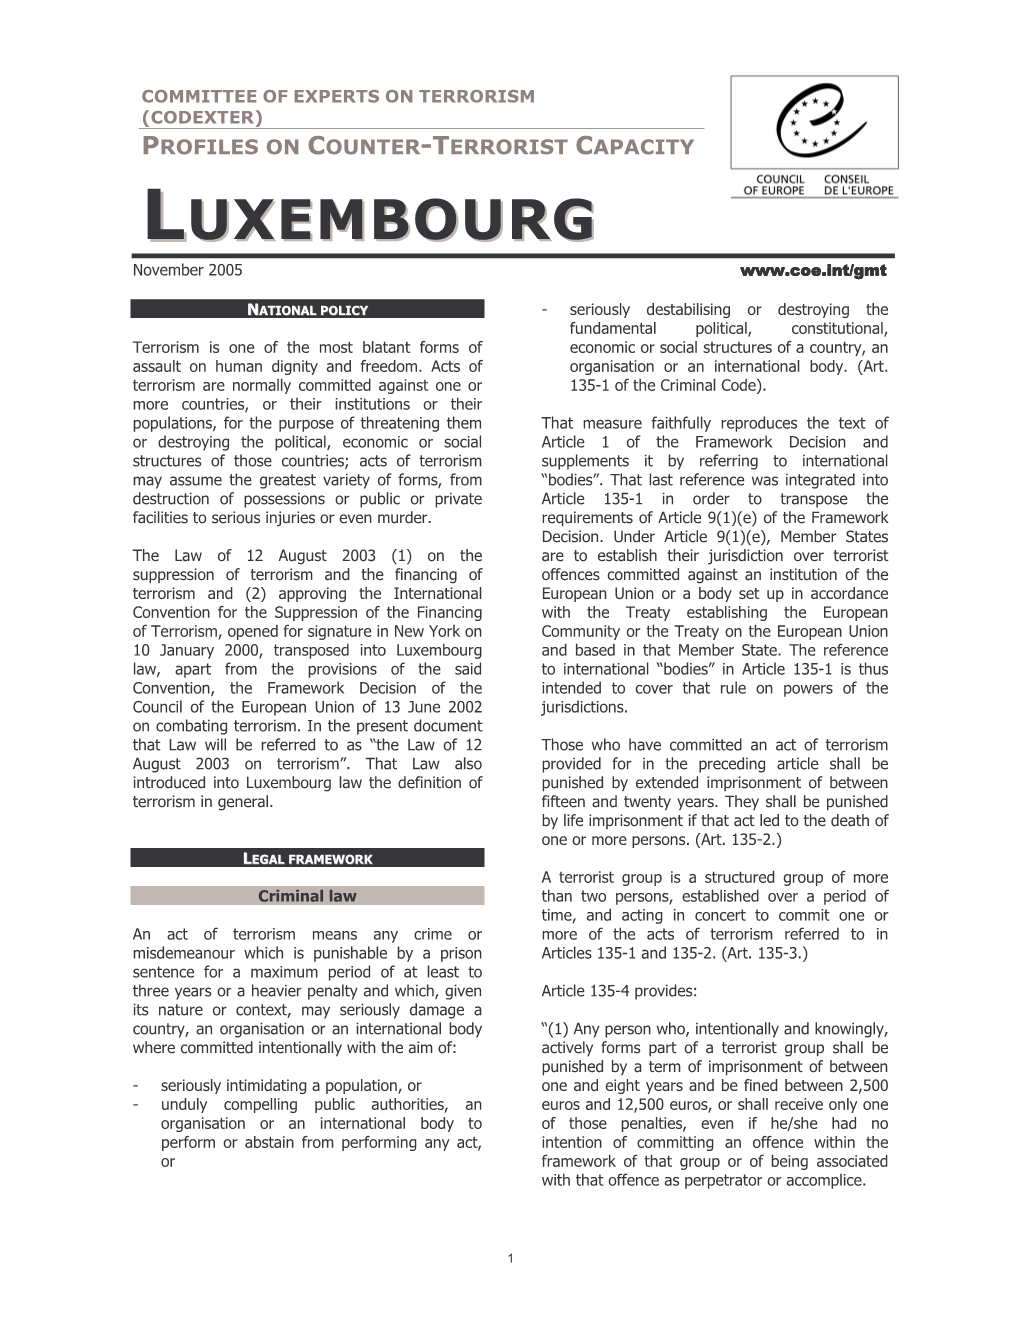 Luxembourg Profile on Counter-Terrorist